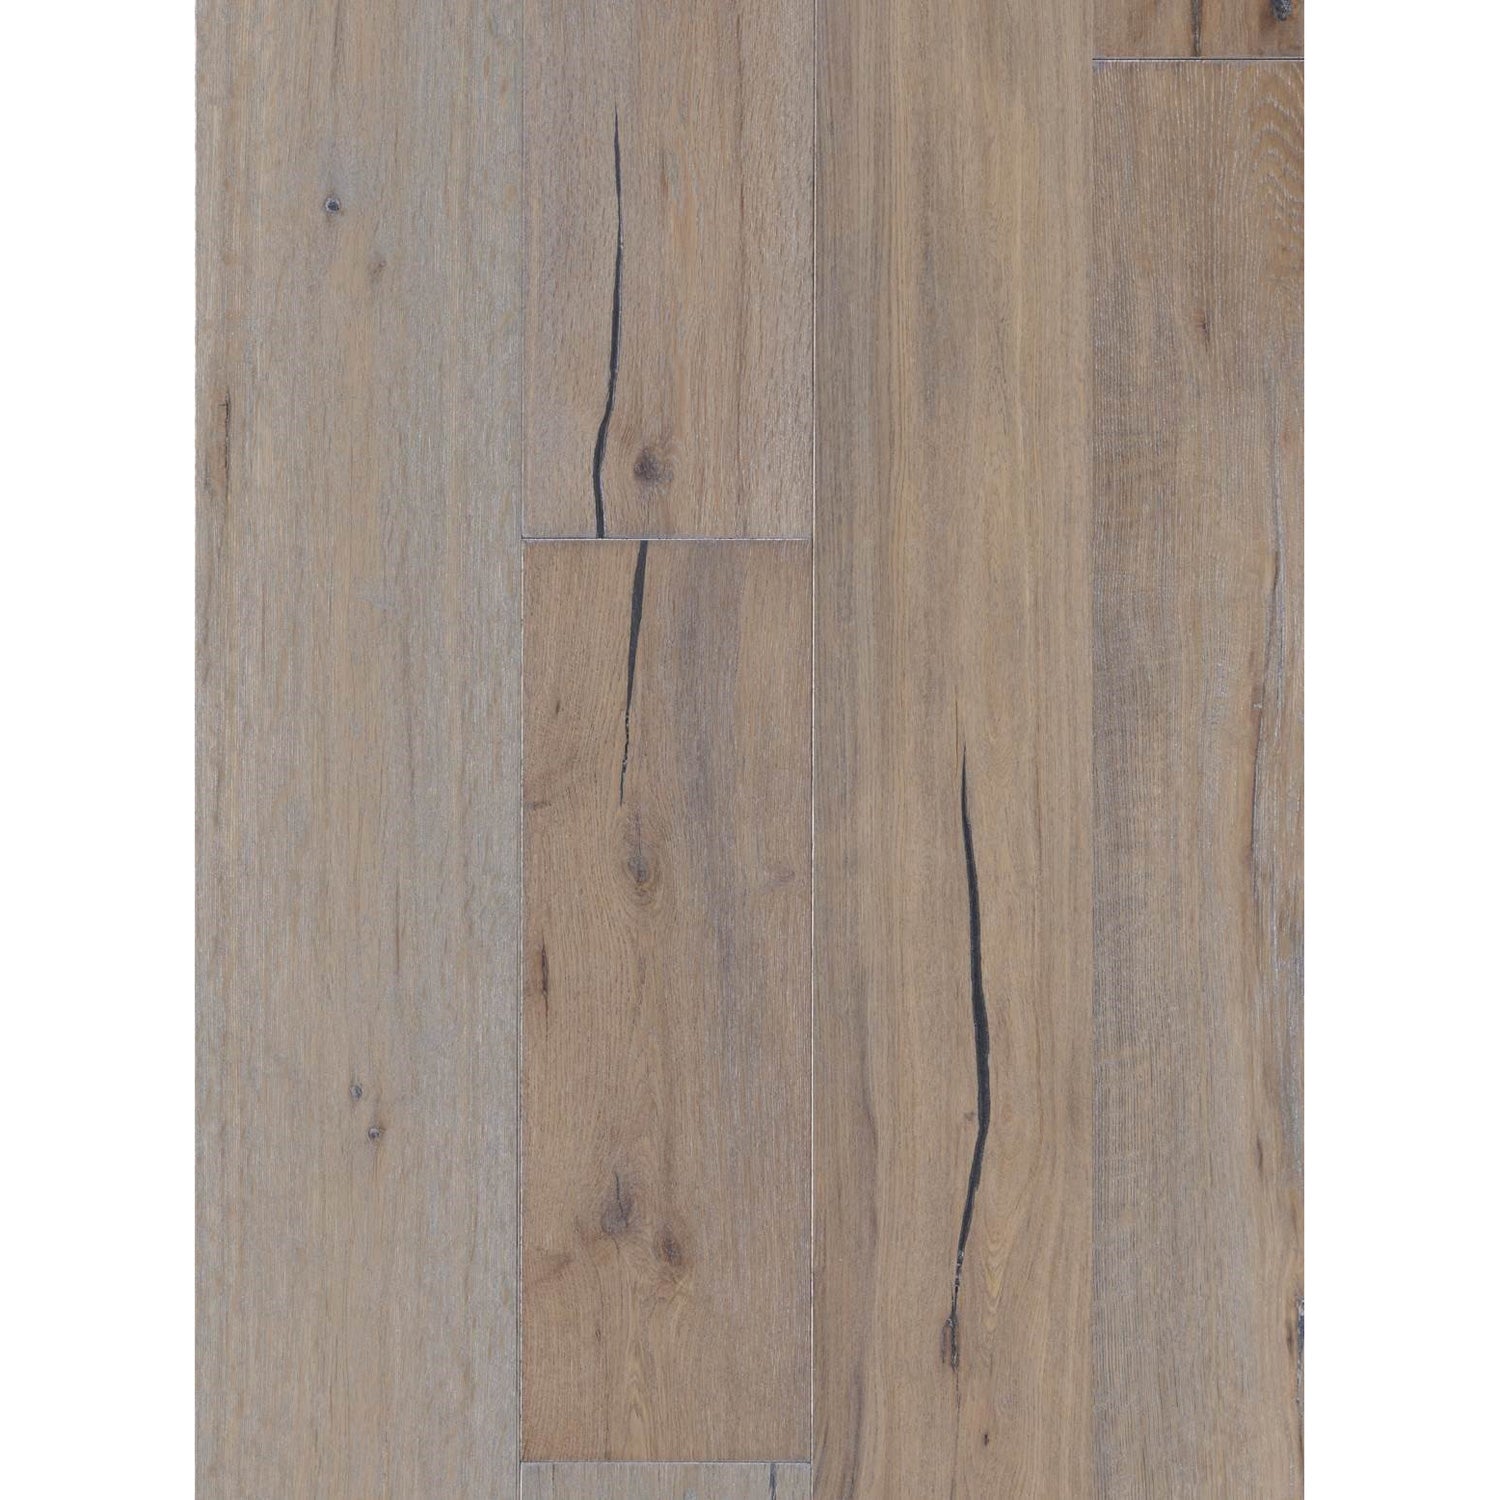 LM Flooring - The Glenn Collection - Silverton White Oak